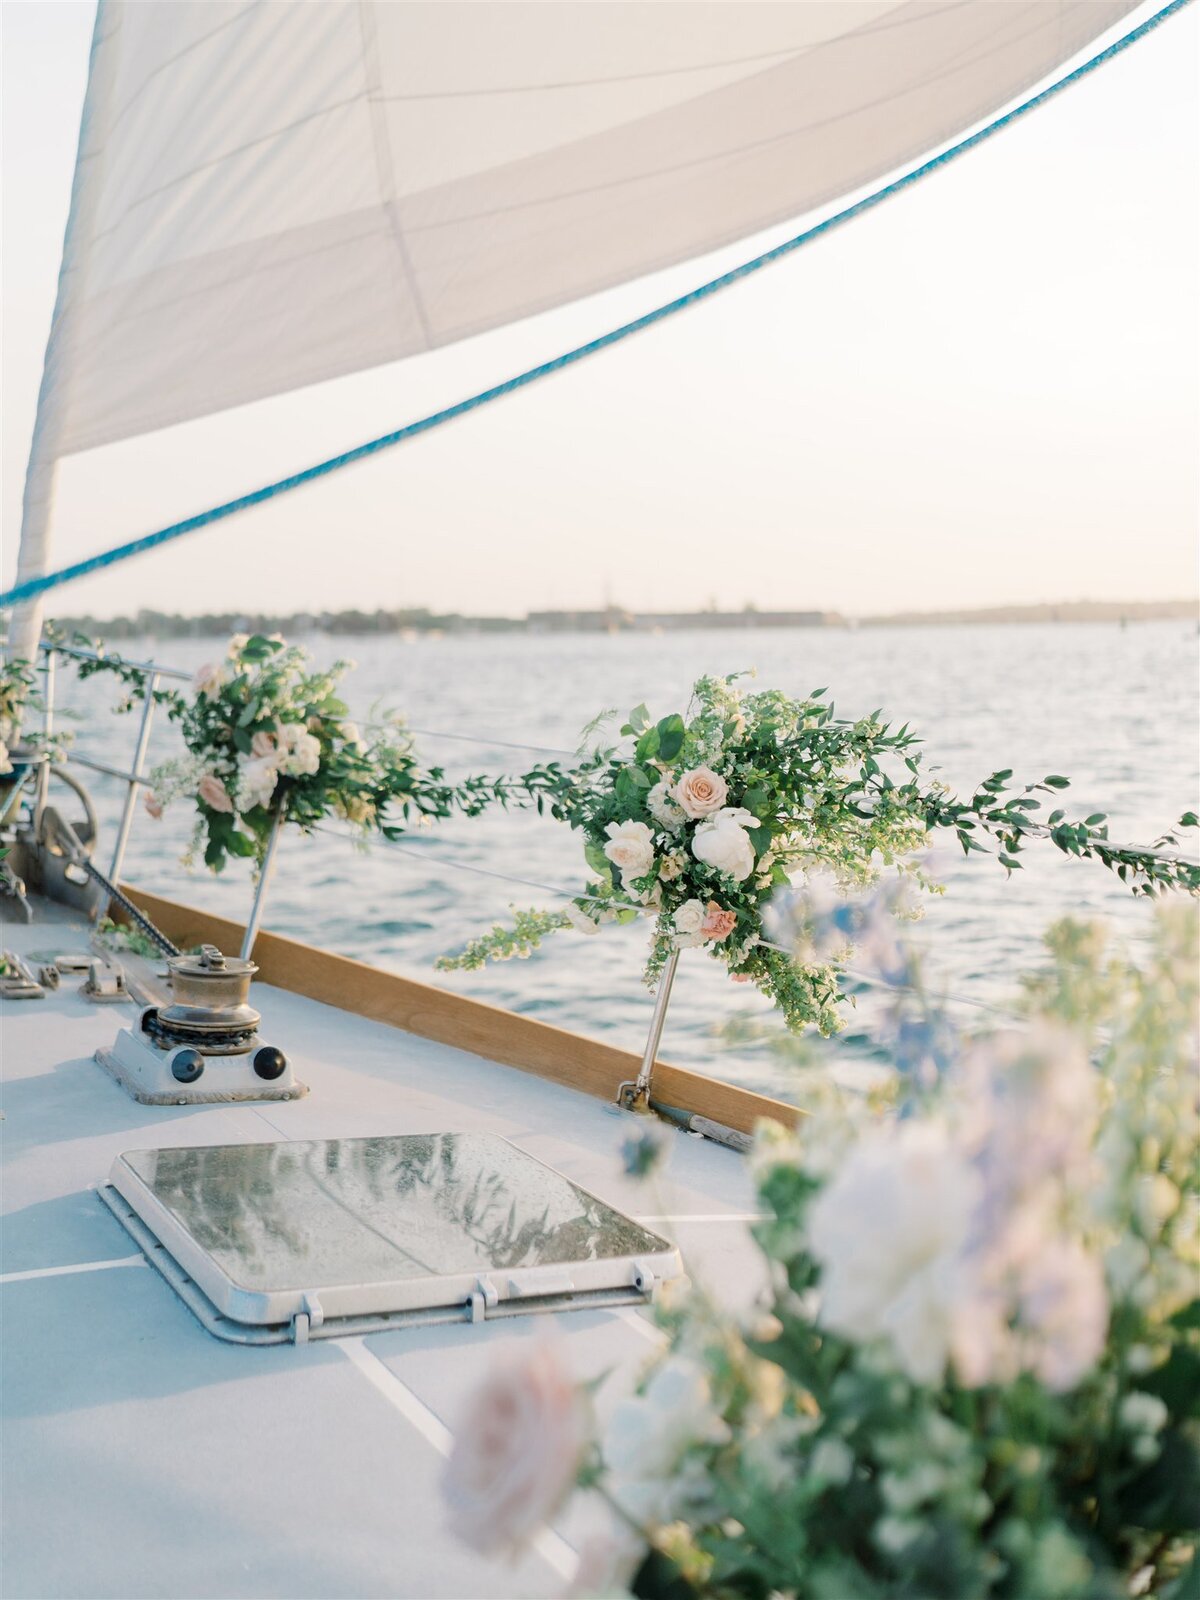 Kate-Murtaugh-Events-RI-wedding-planner-coastal-Newport-luxury-elopement-floral-installation-sailboat-yacht-sail-RI-greenery-bow